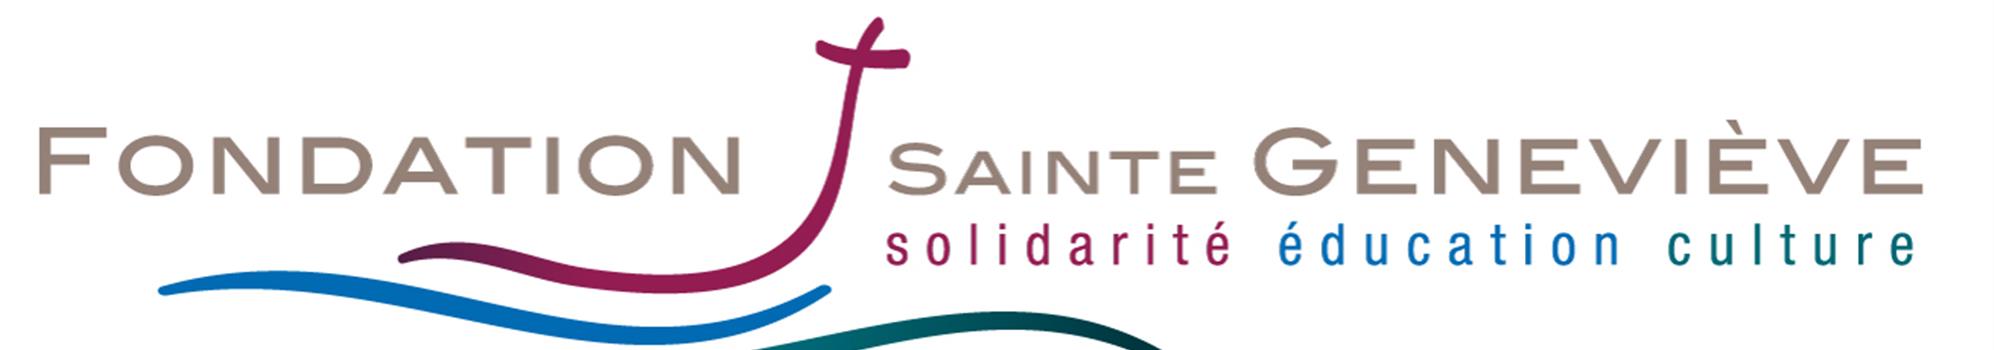 Fondation Sainte Geneviève